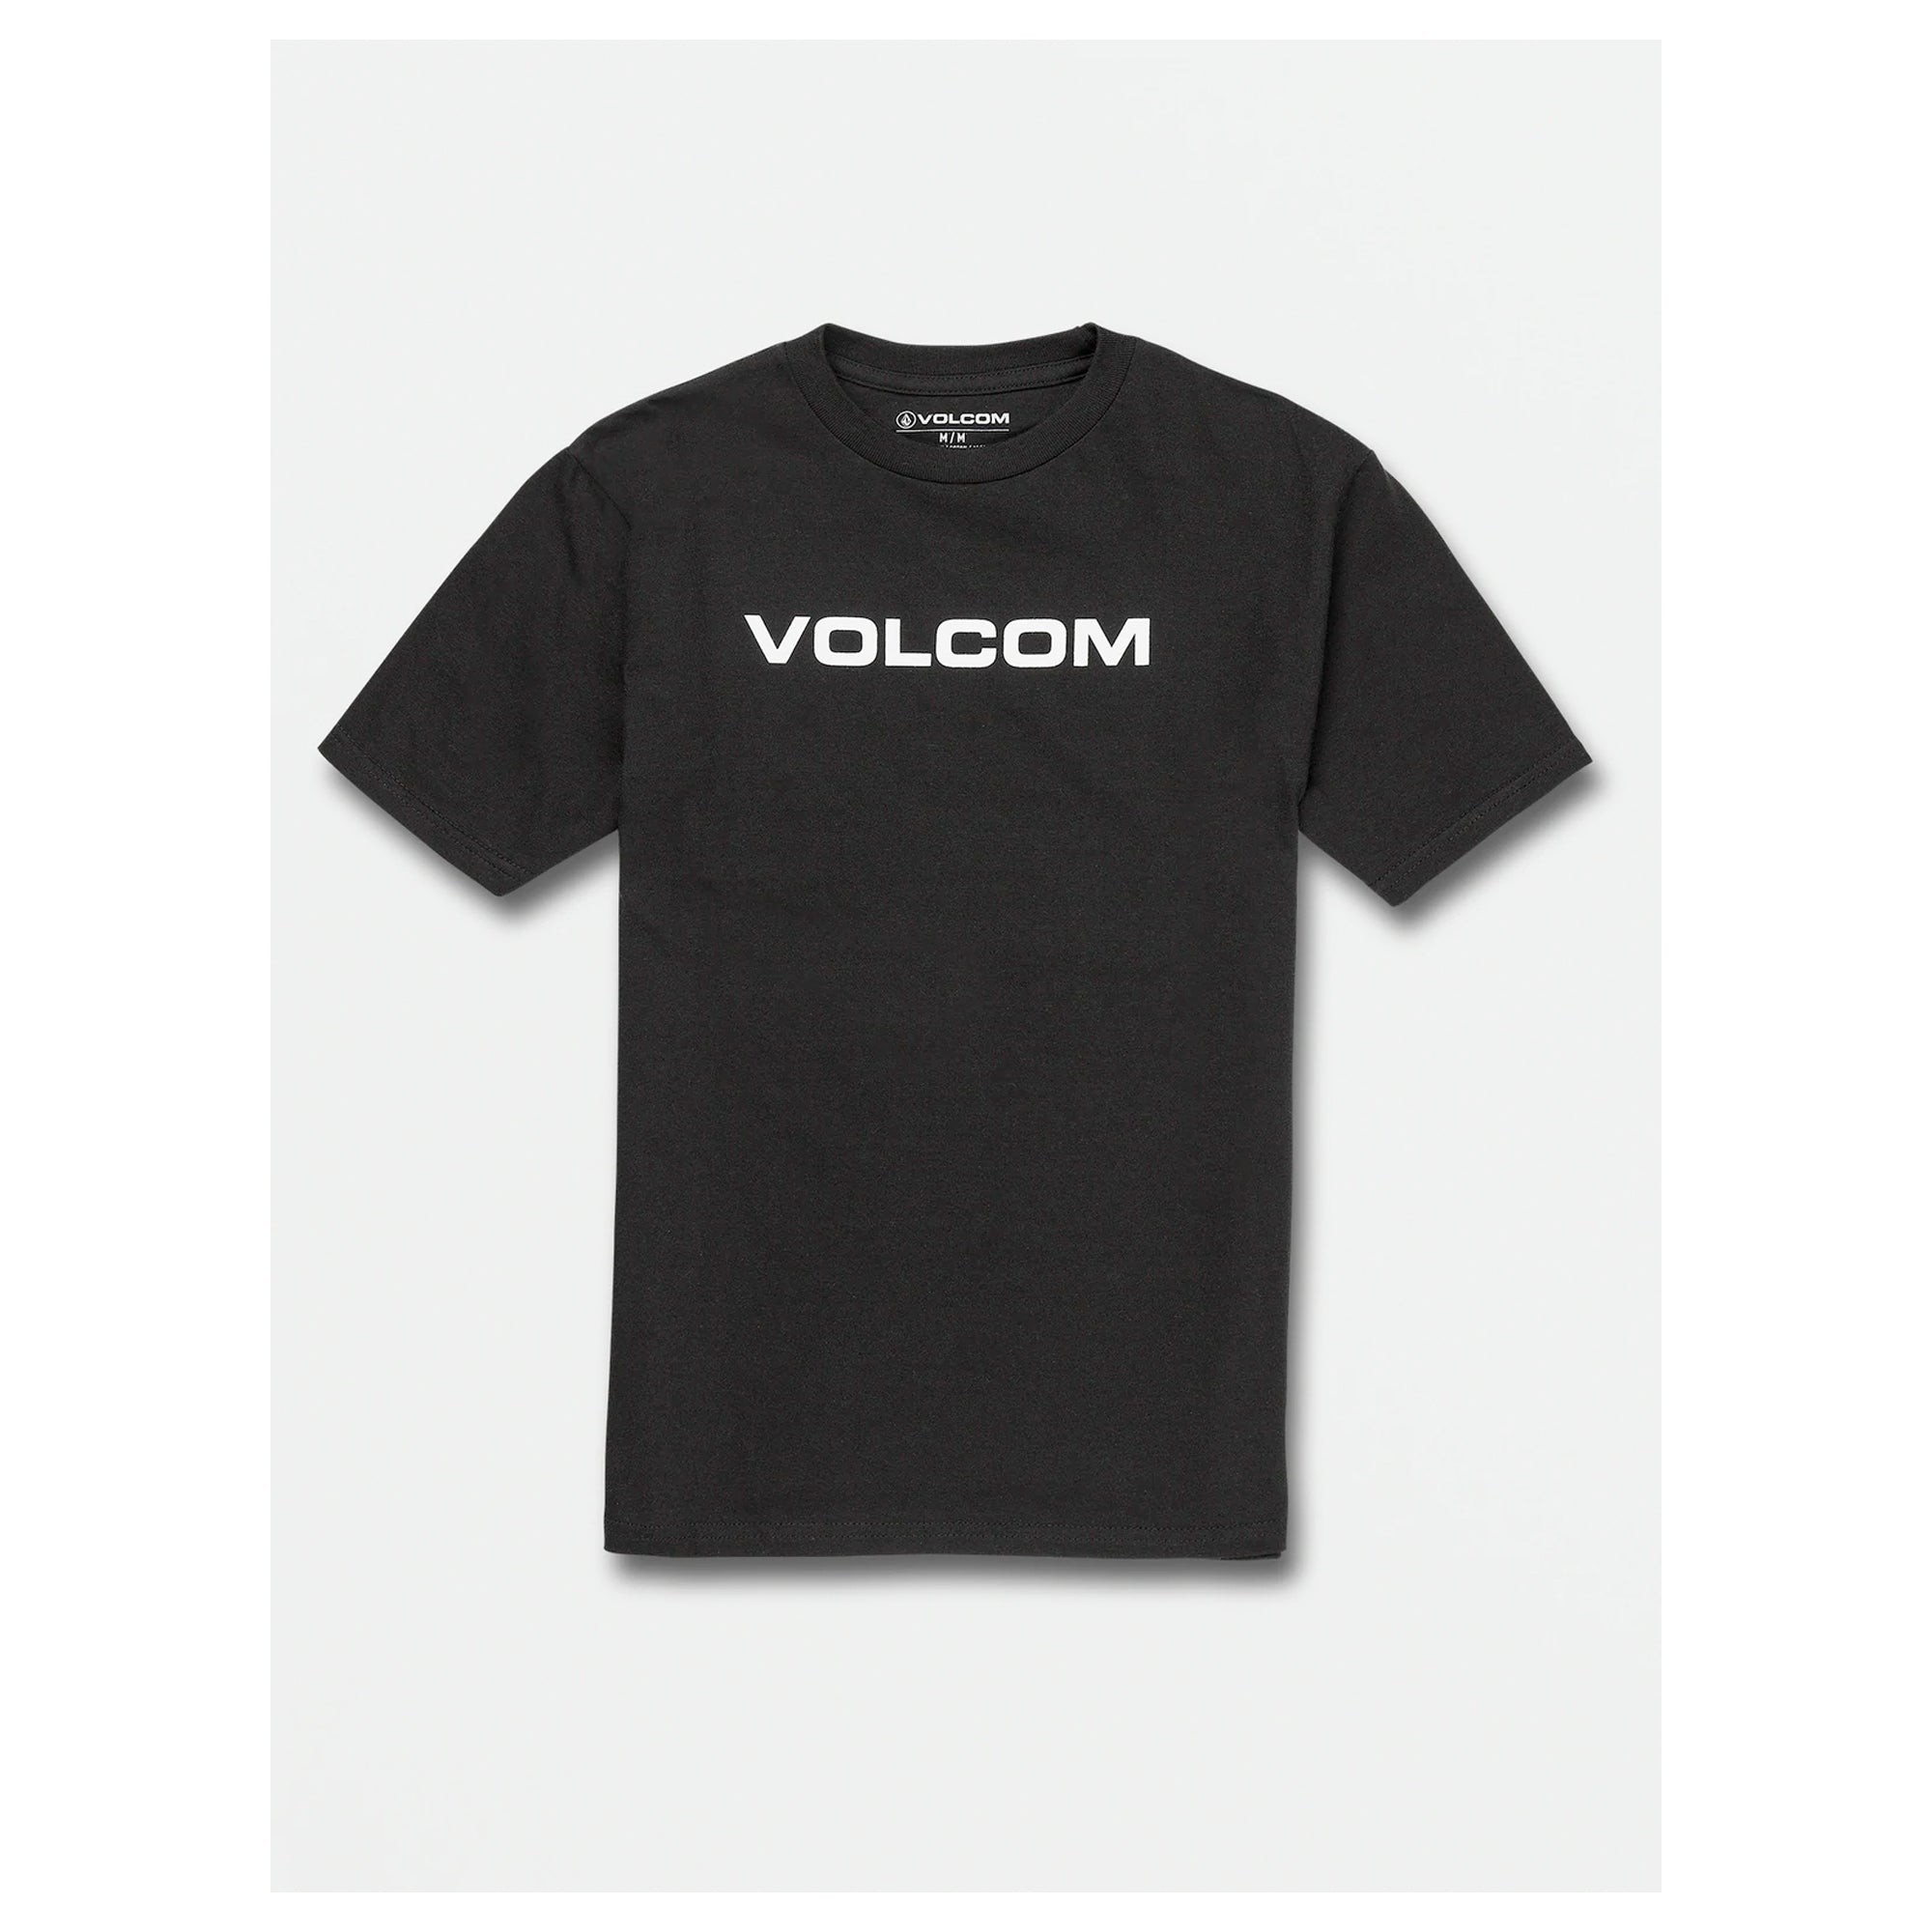 Volcom Euro Youth Boy's S/S T-Shirt